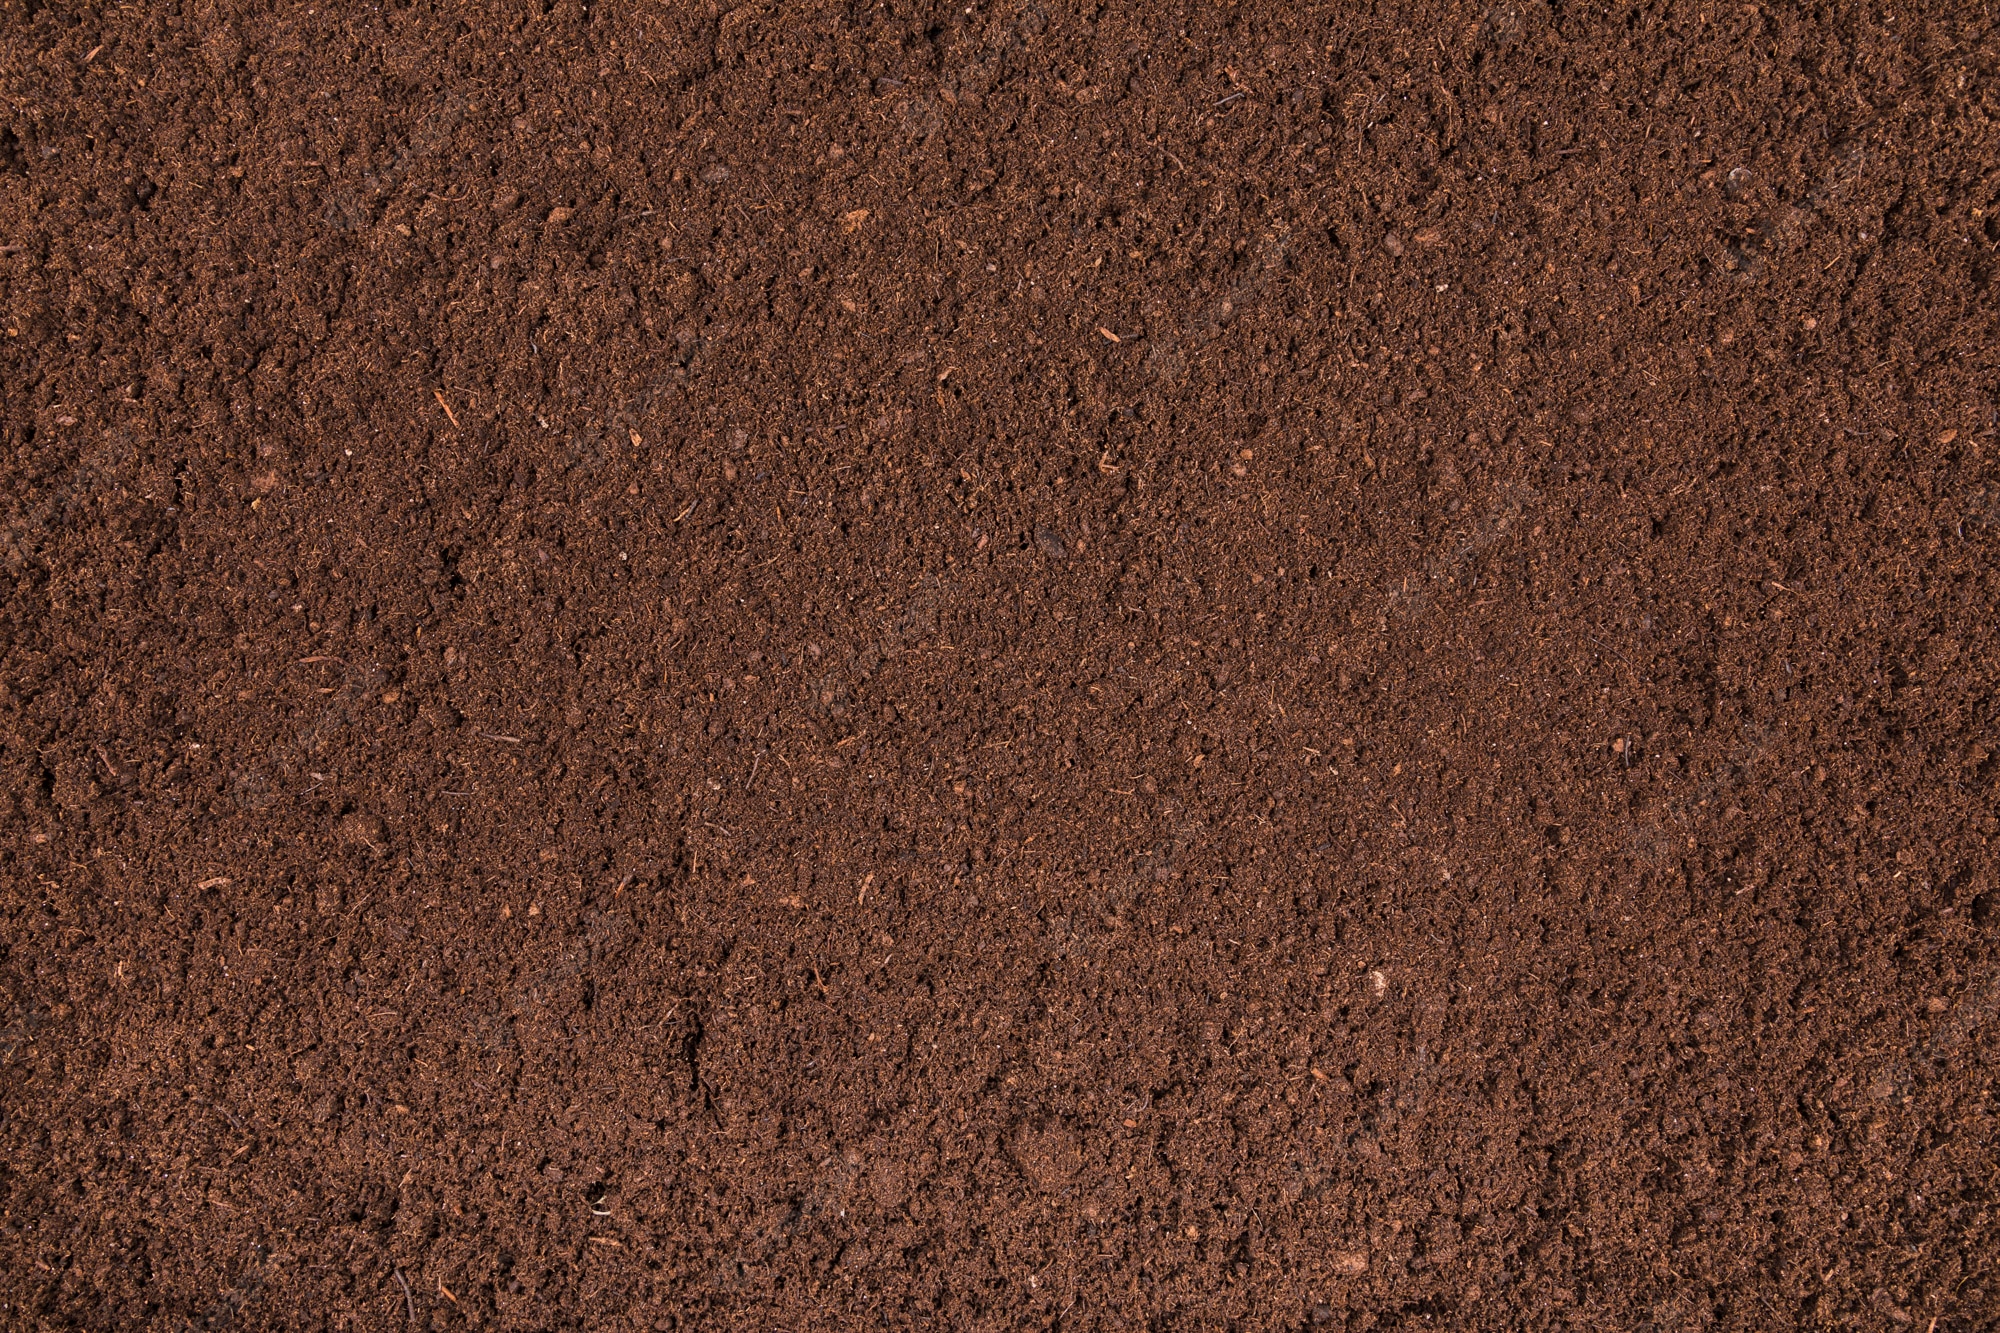 Soil, ground texture image